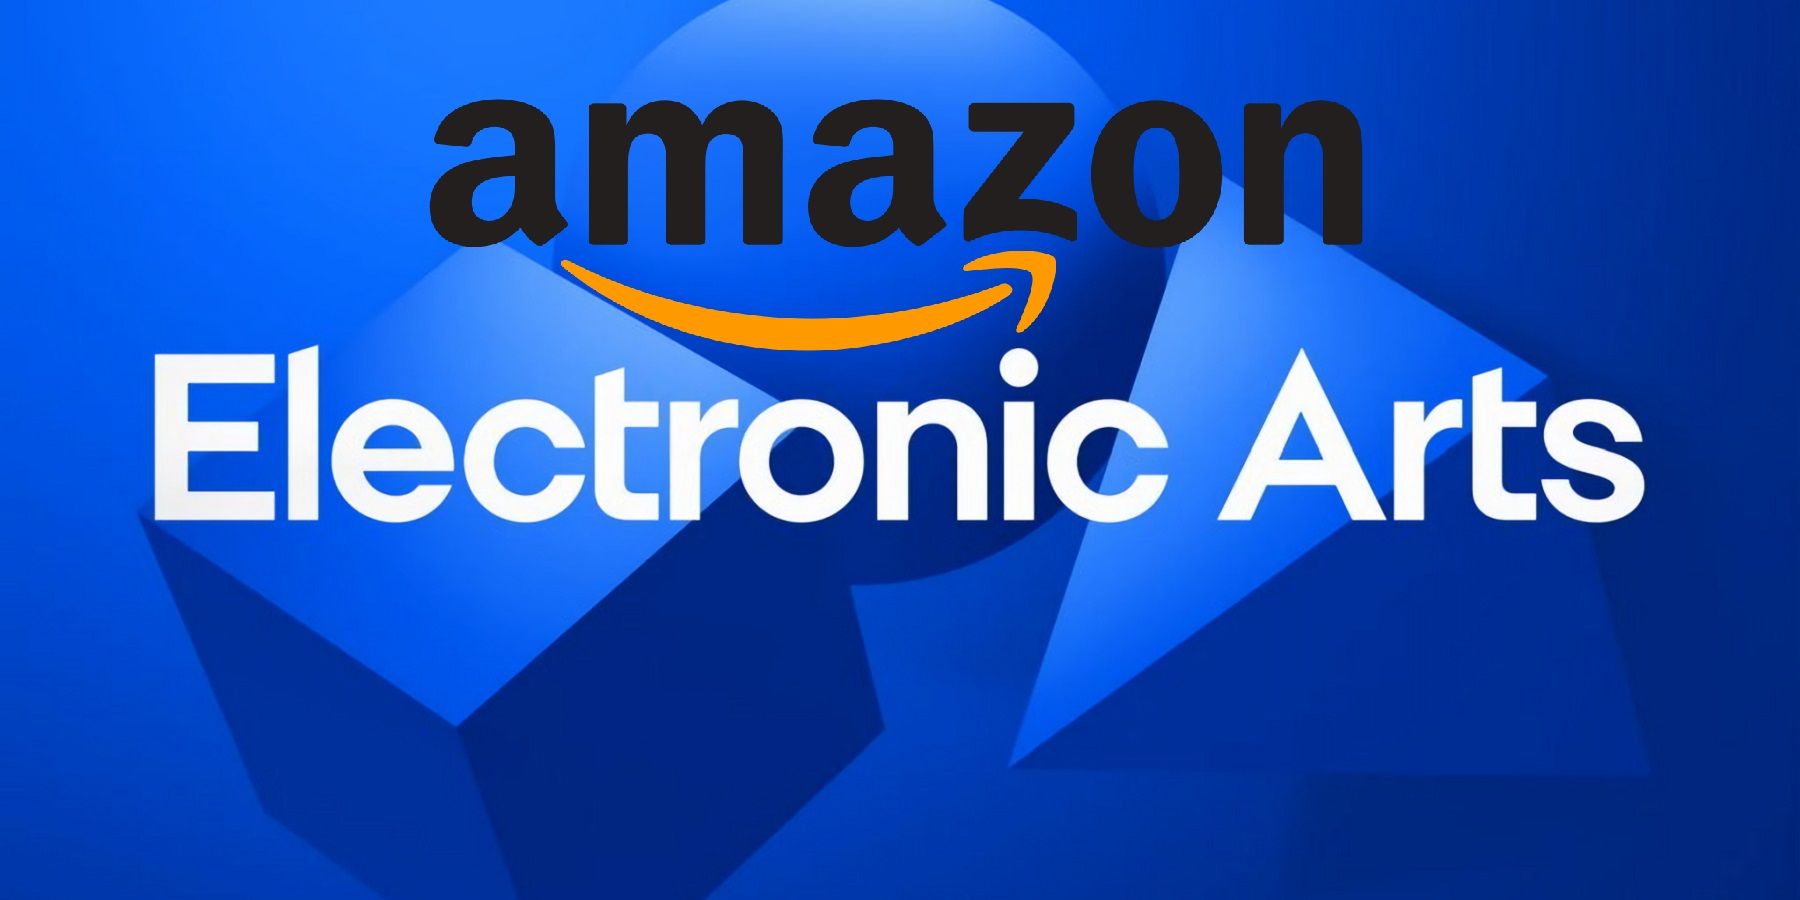 amazon and electronic arts logo